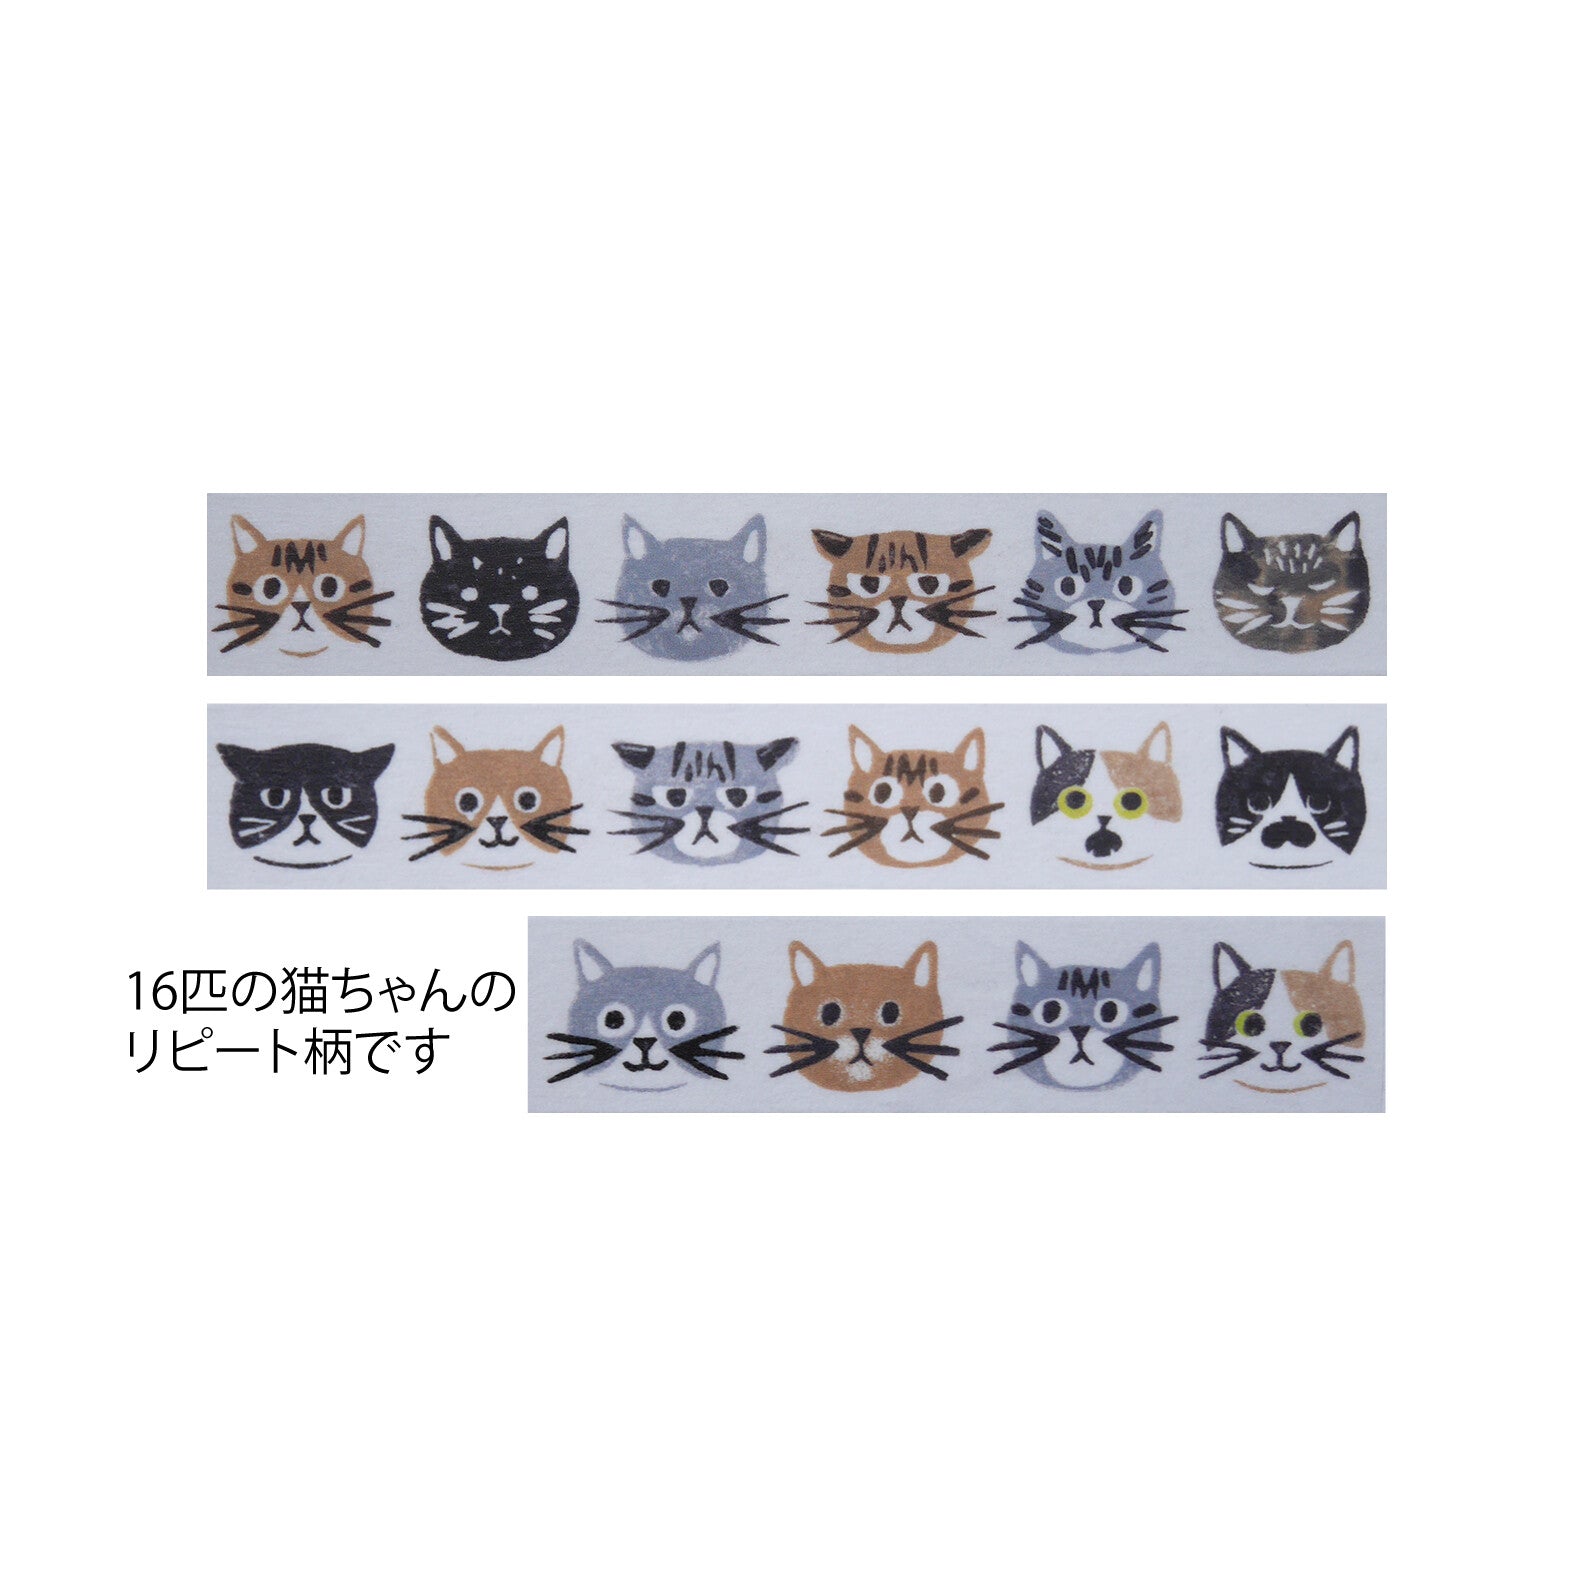 4Legs Washi Tape: Cats C